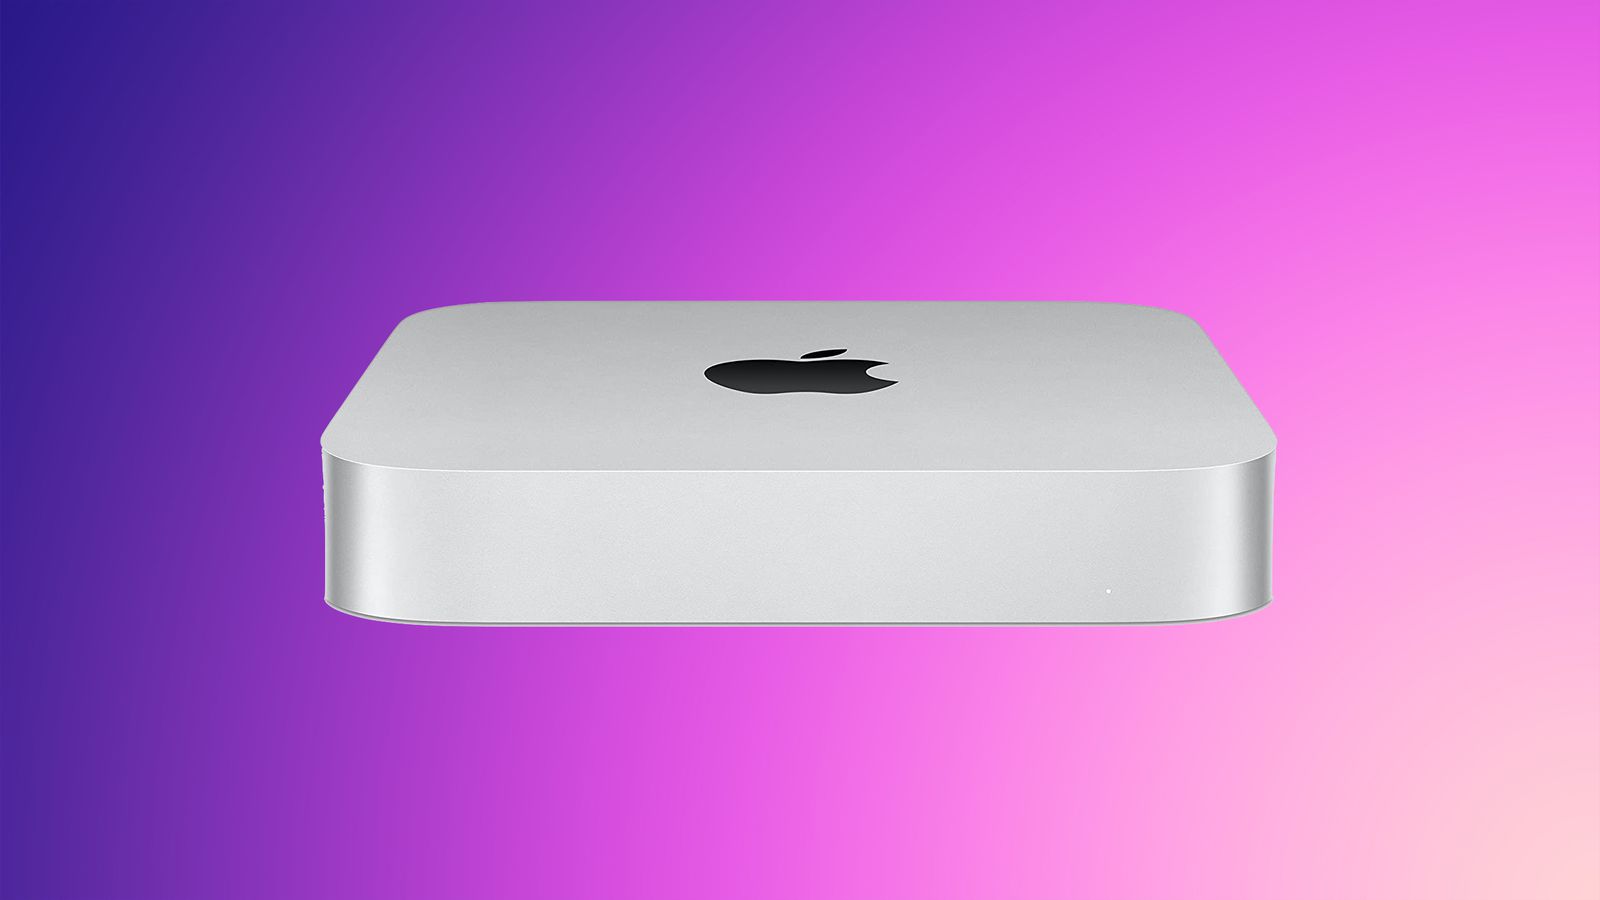 Apple May Be Testing an M3 Mac Mini, Based on Developer Logs